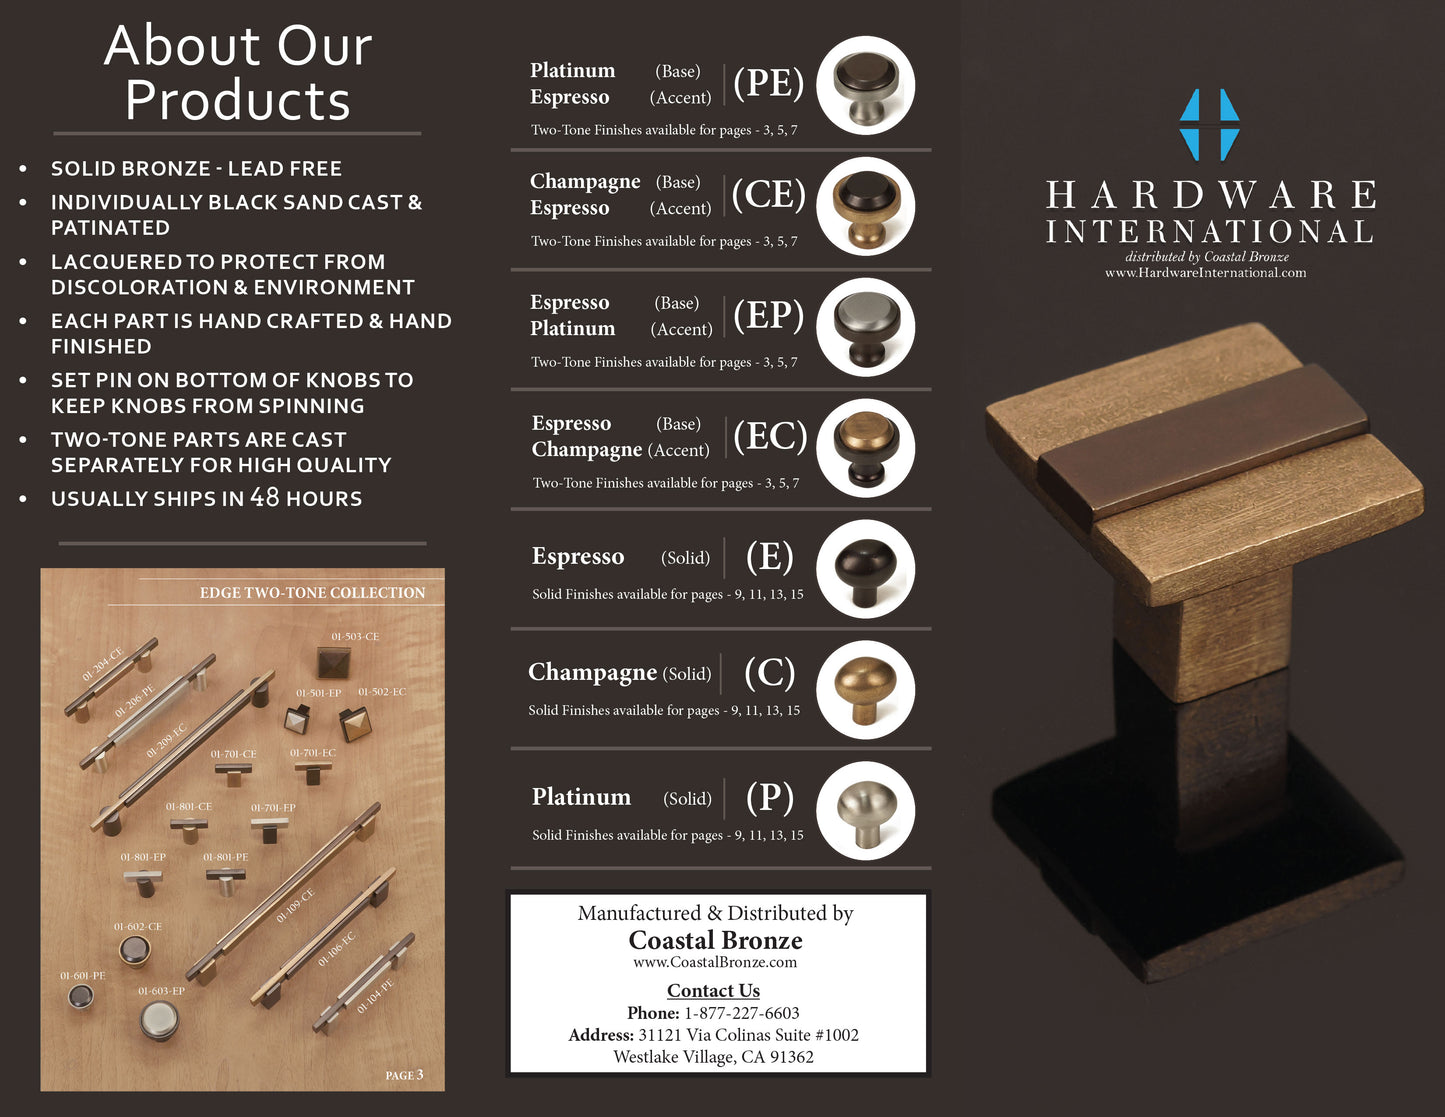 Hardware International Trifold - 10 Pack